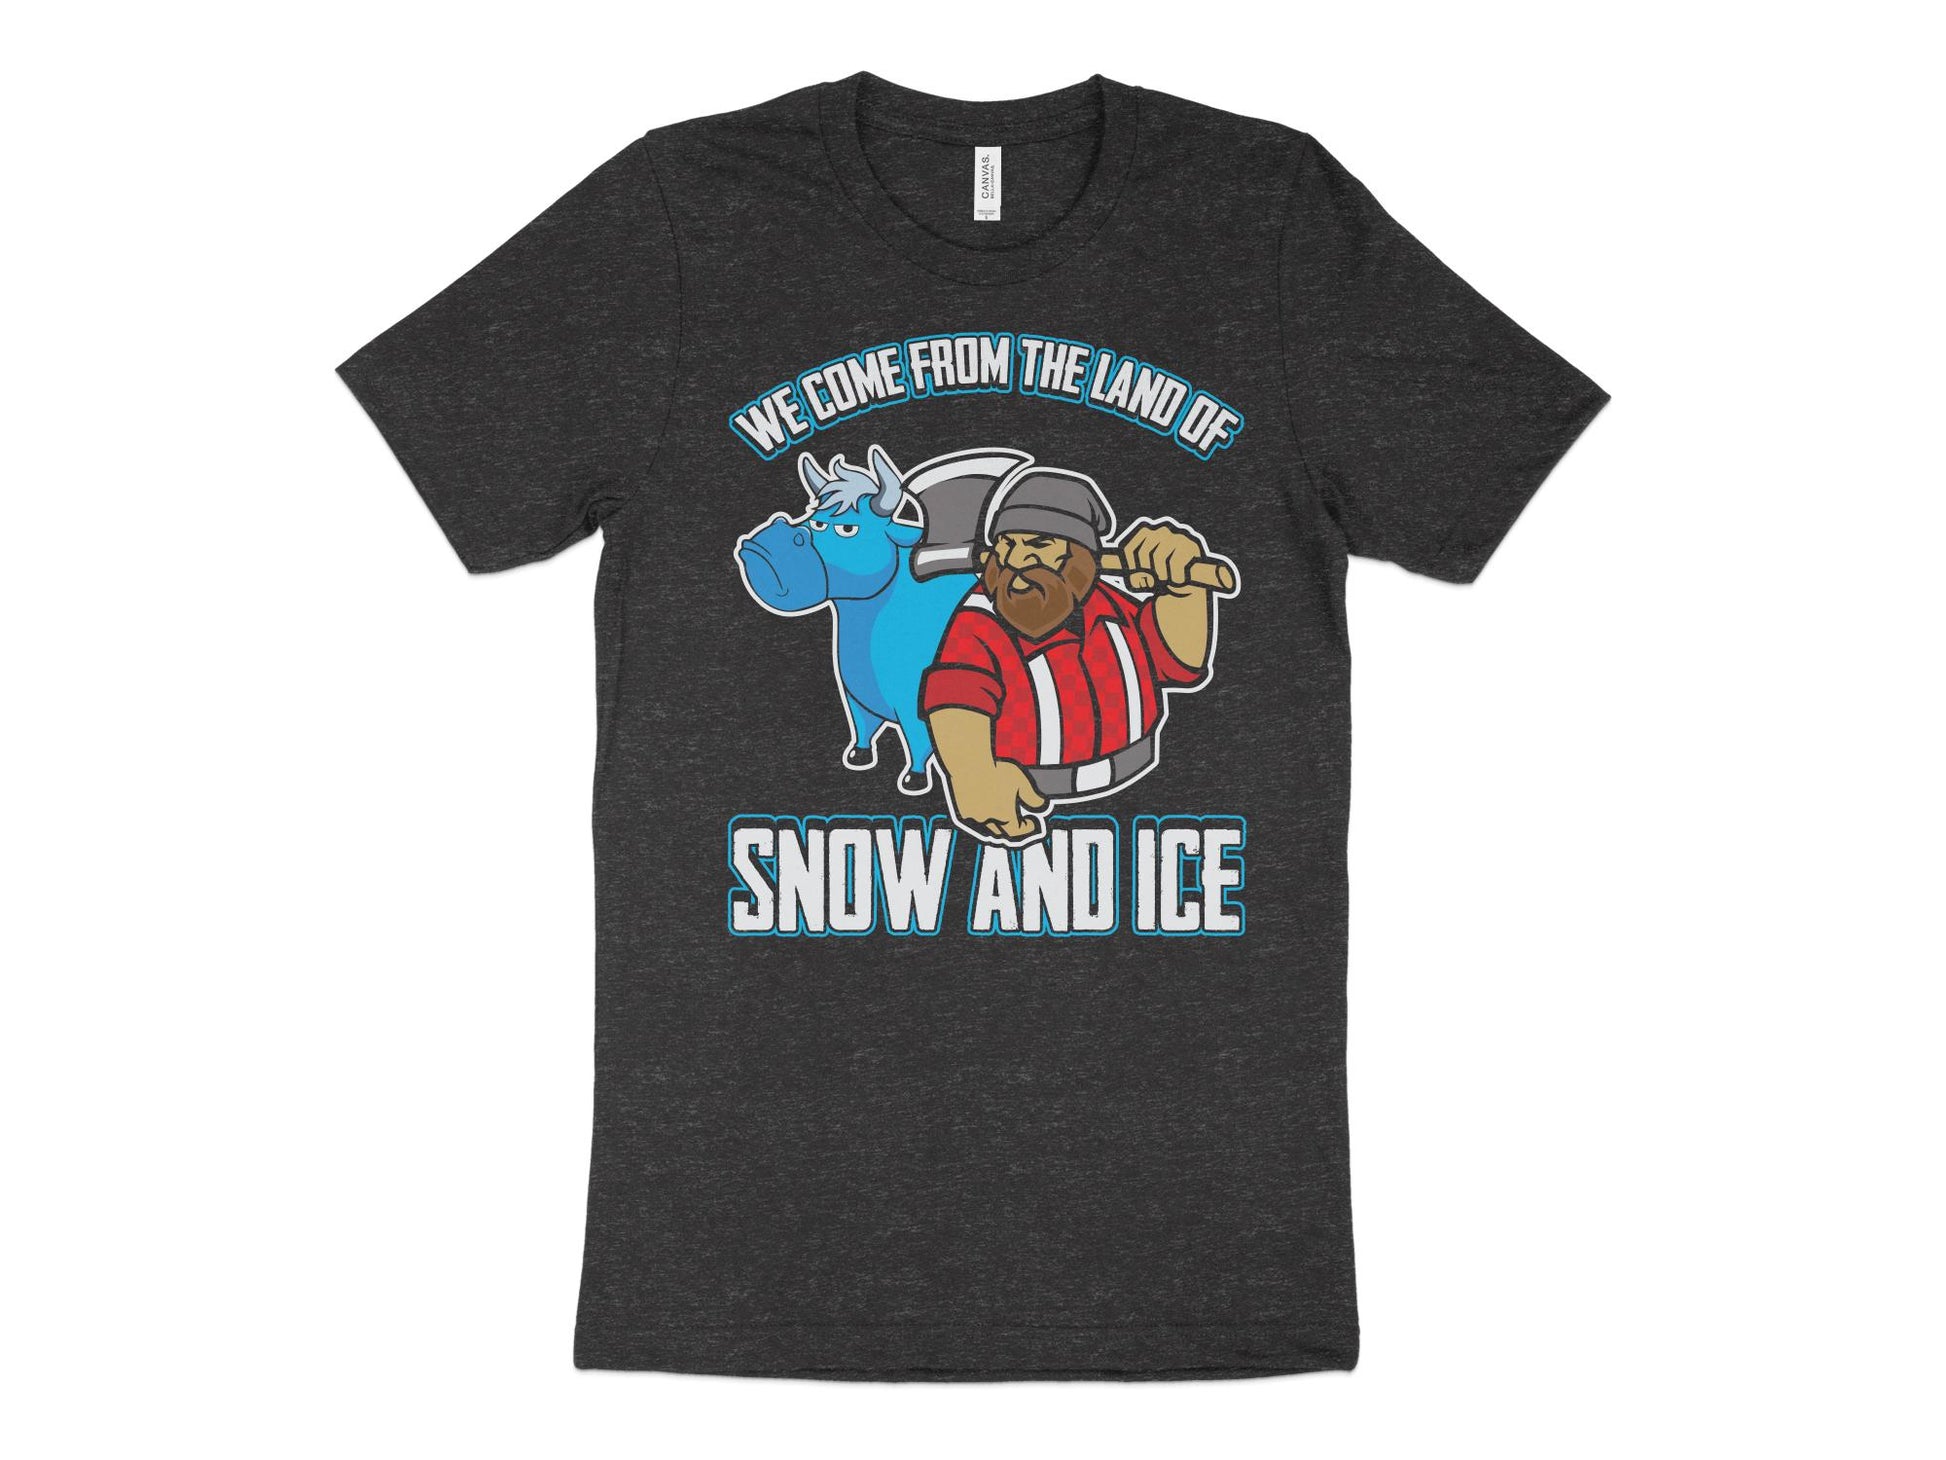 Minnesota T Shirt Land of Snow and Ice, charcoal